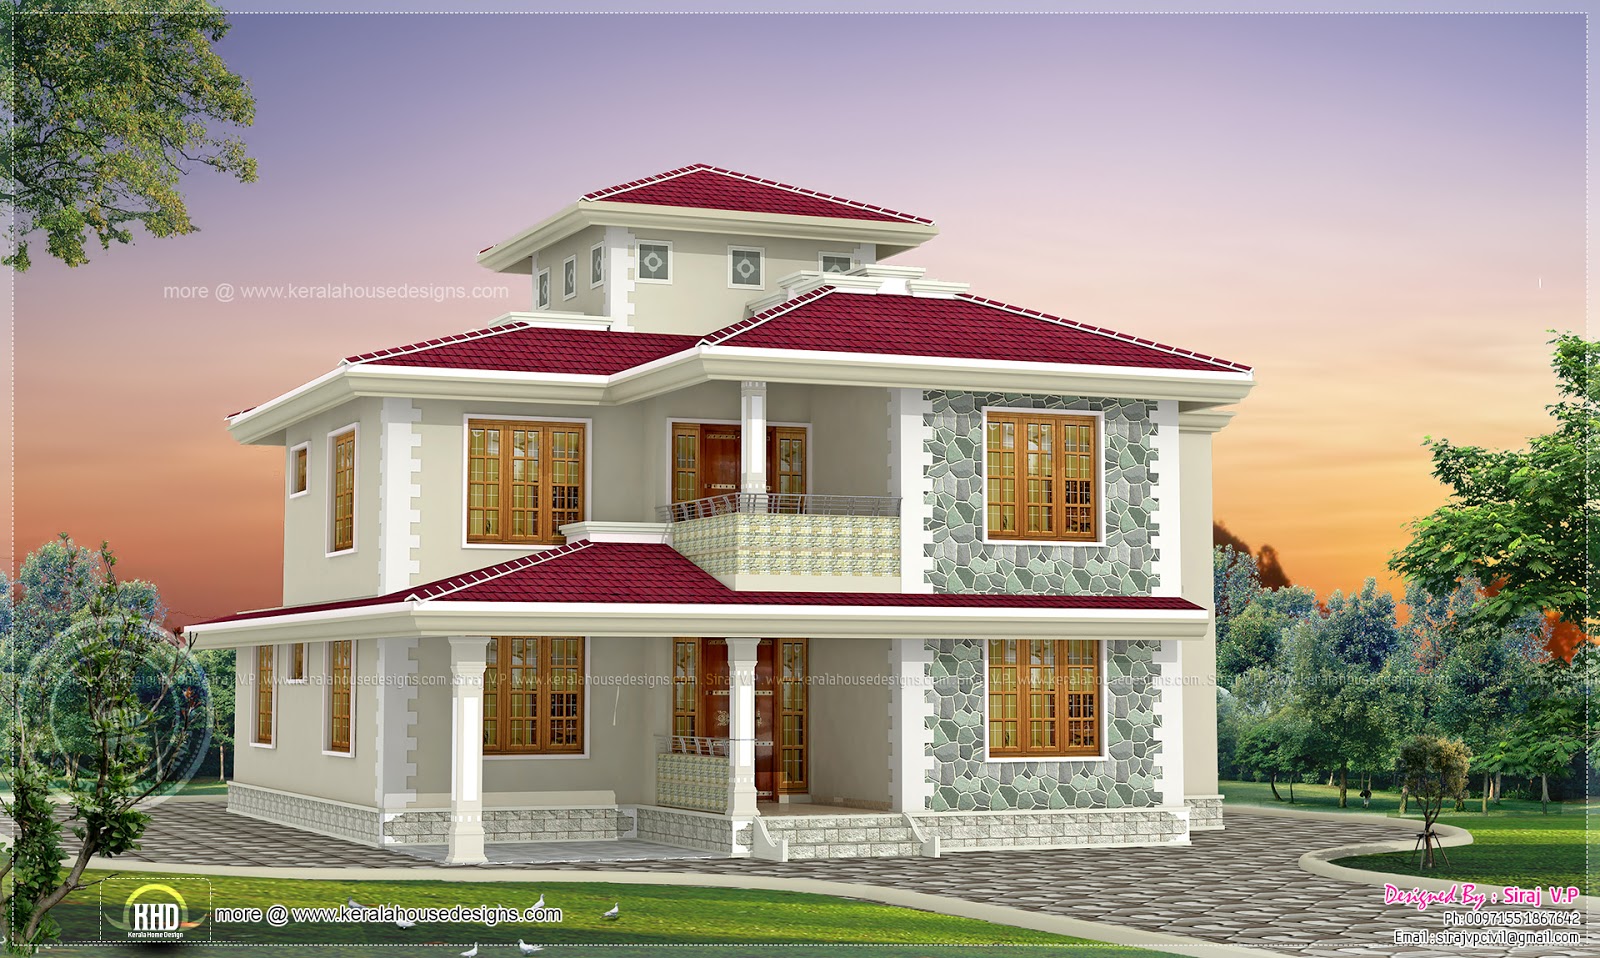 4 BHK Kerala  style  home  design  Kerala  home  design  and 